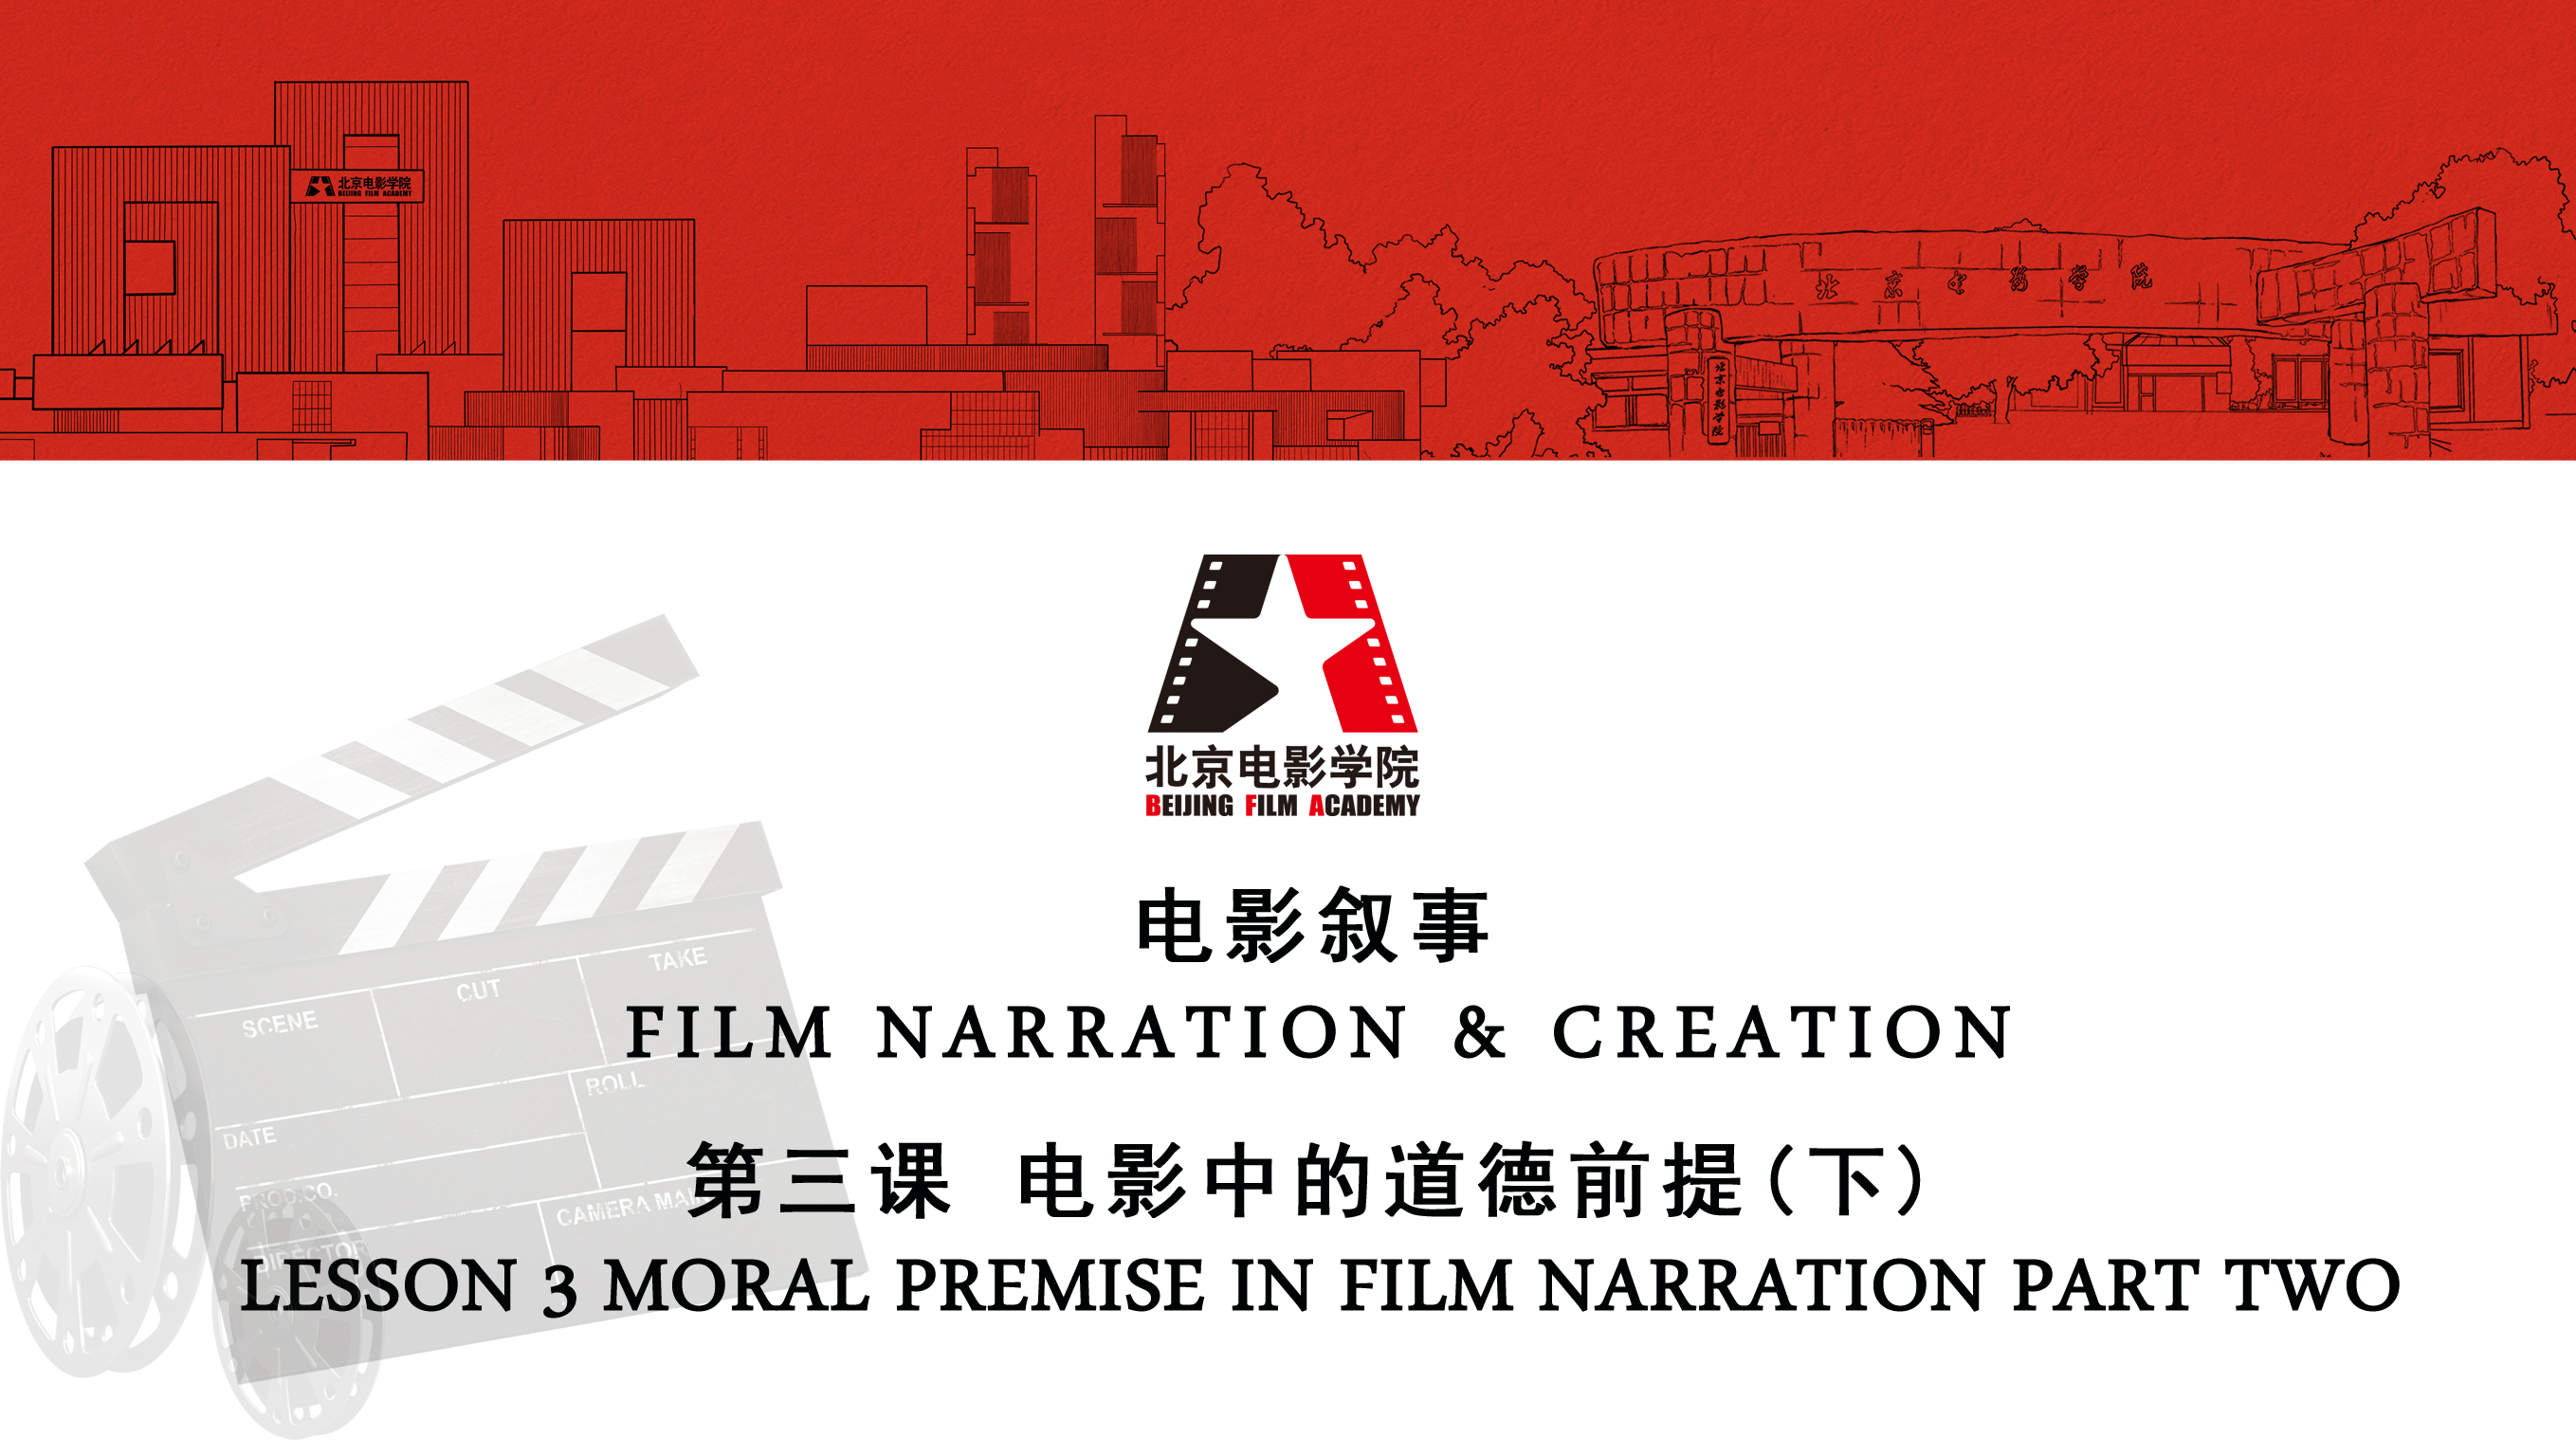 FILM NARRATION & CREATION LESSON 3 MORAL PREMISE IN FILM NARRATION PART TWO